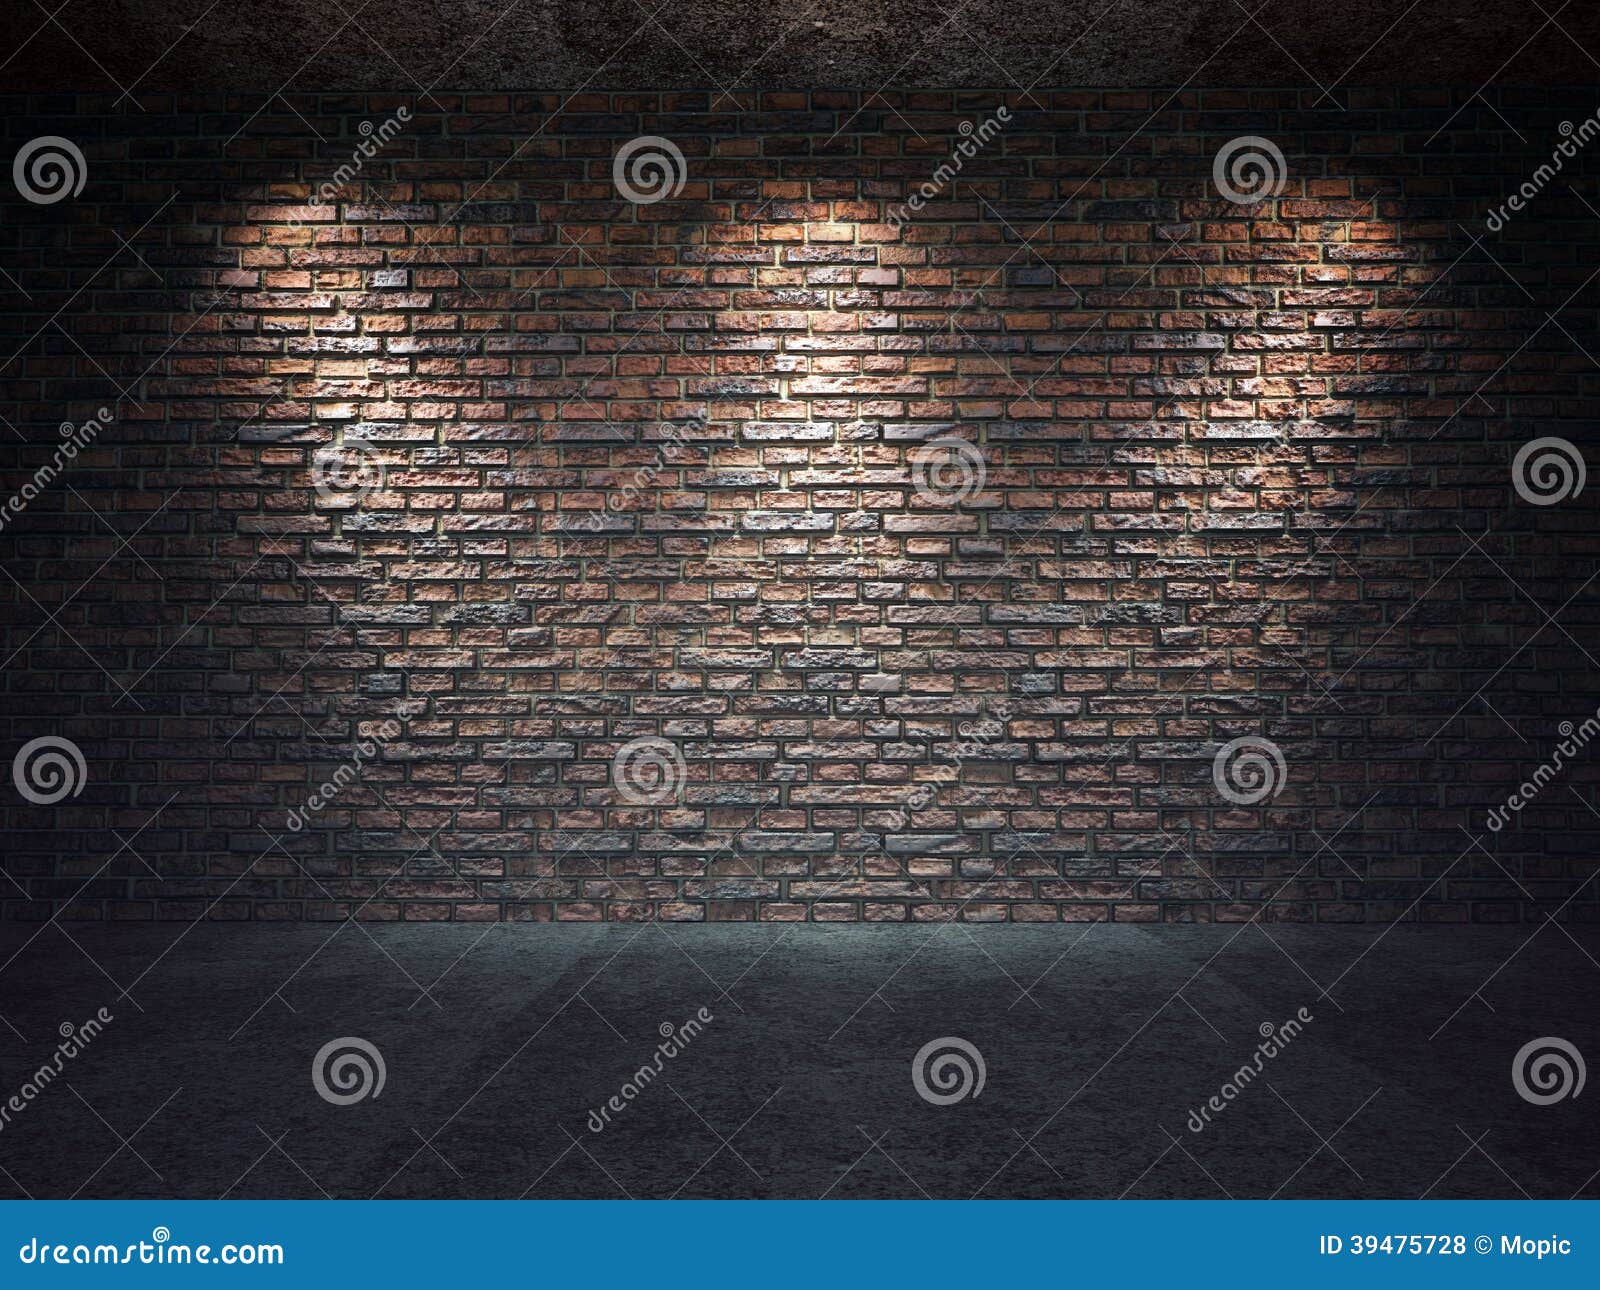 old brick wall illuminated by spotlights